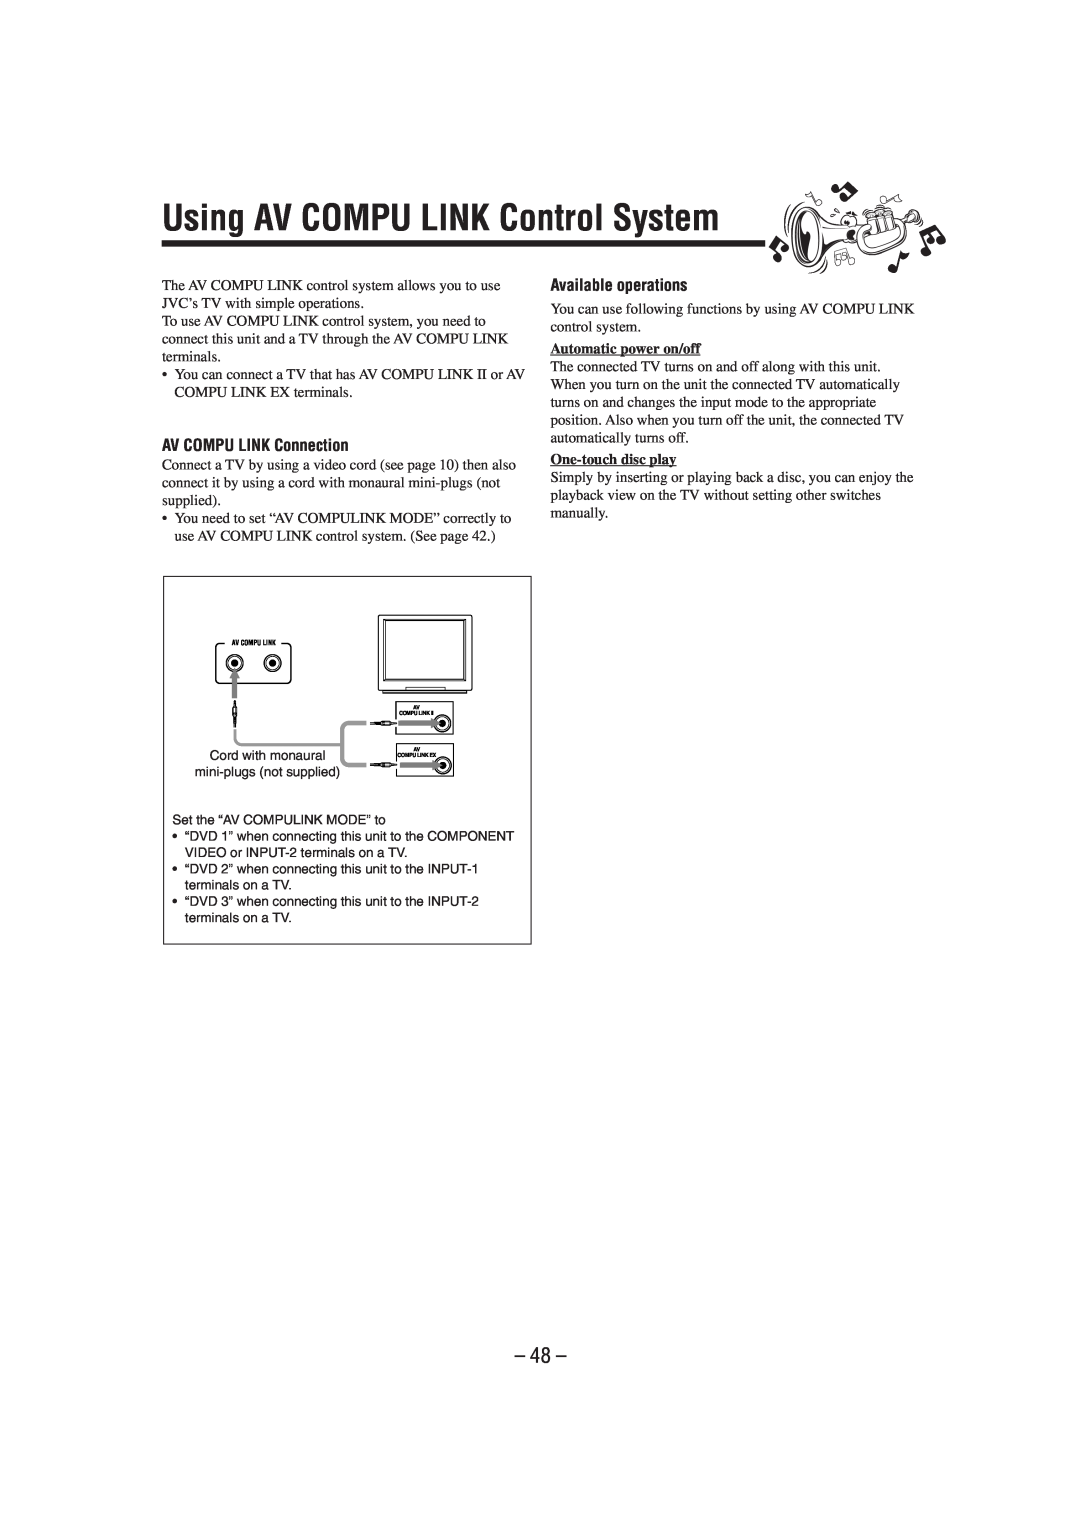 JVC CA-MXDVA9 Using AV COMPU LINK Control System, 48, AV COMPU LINK Connection, Available operations, One-touchdisc play 